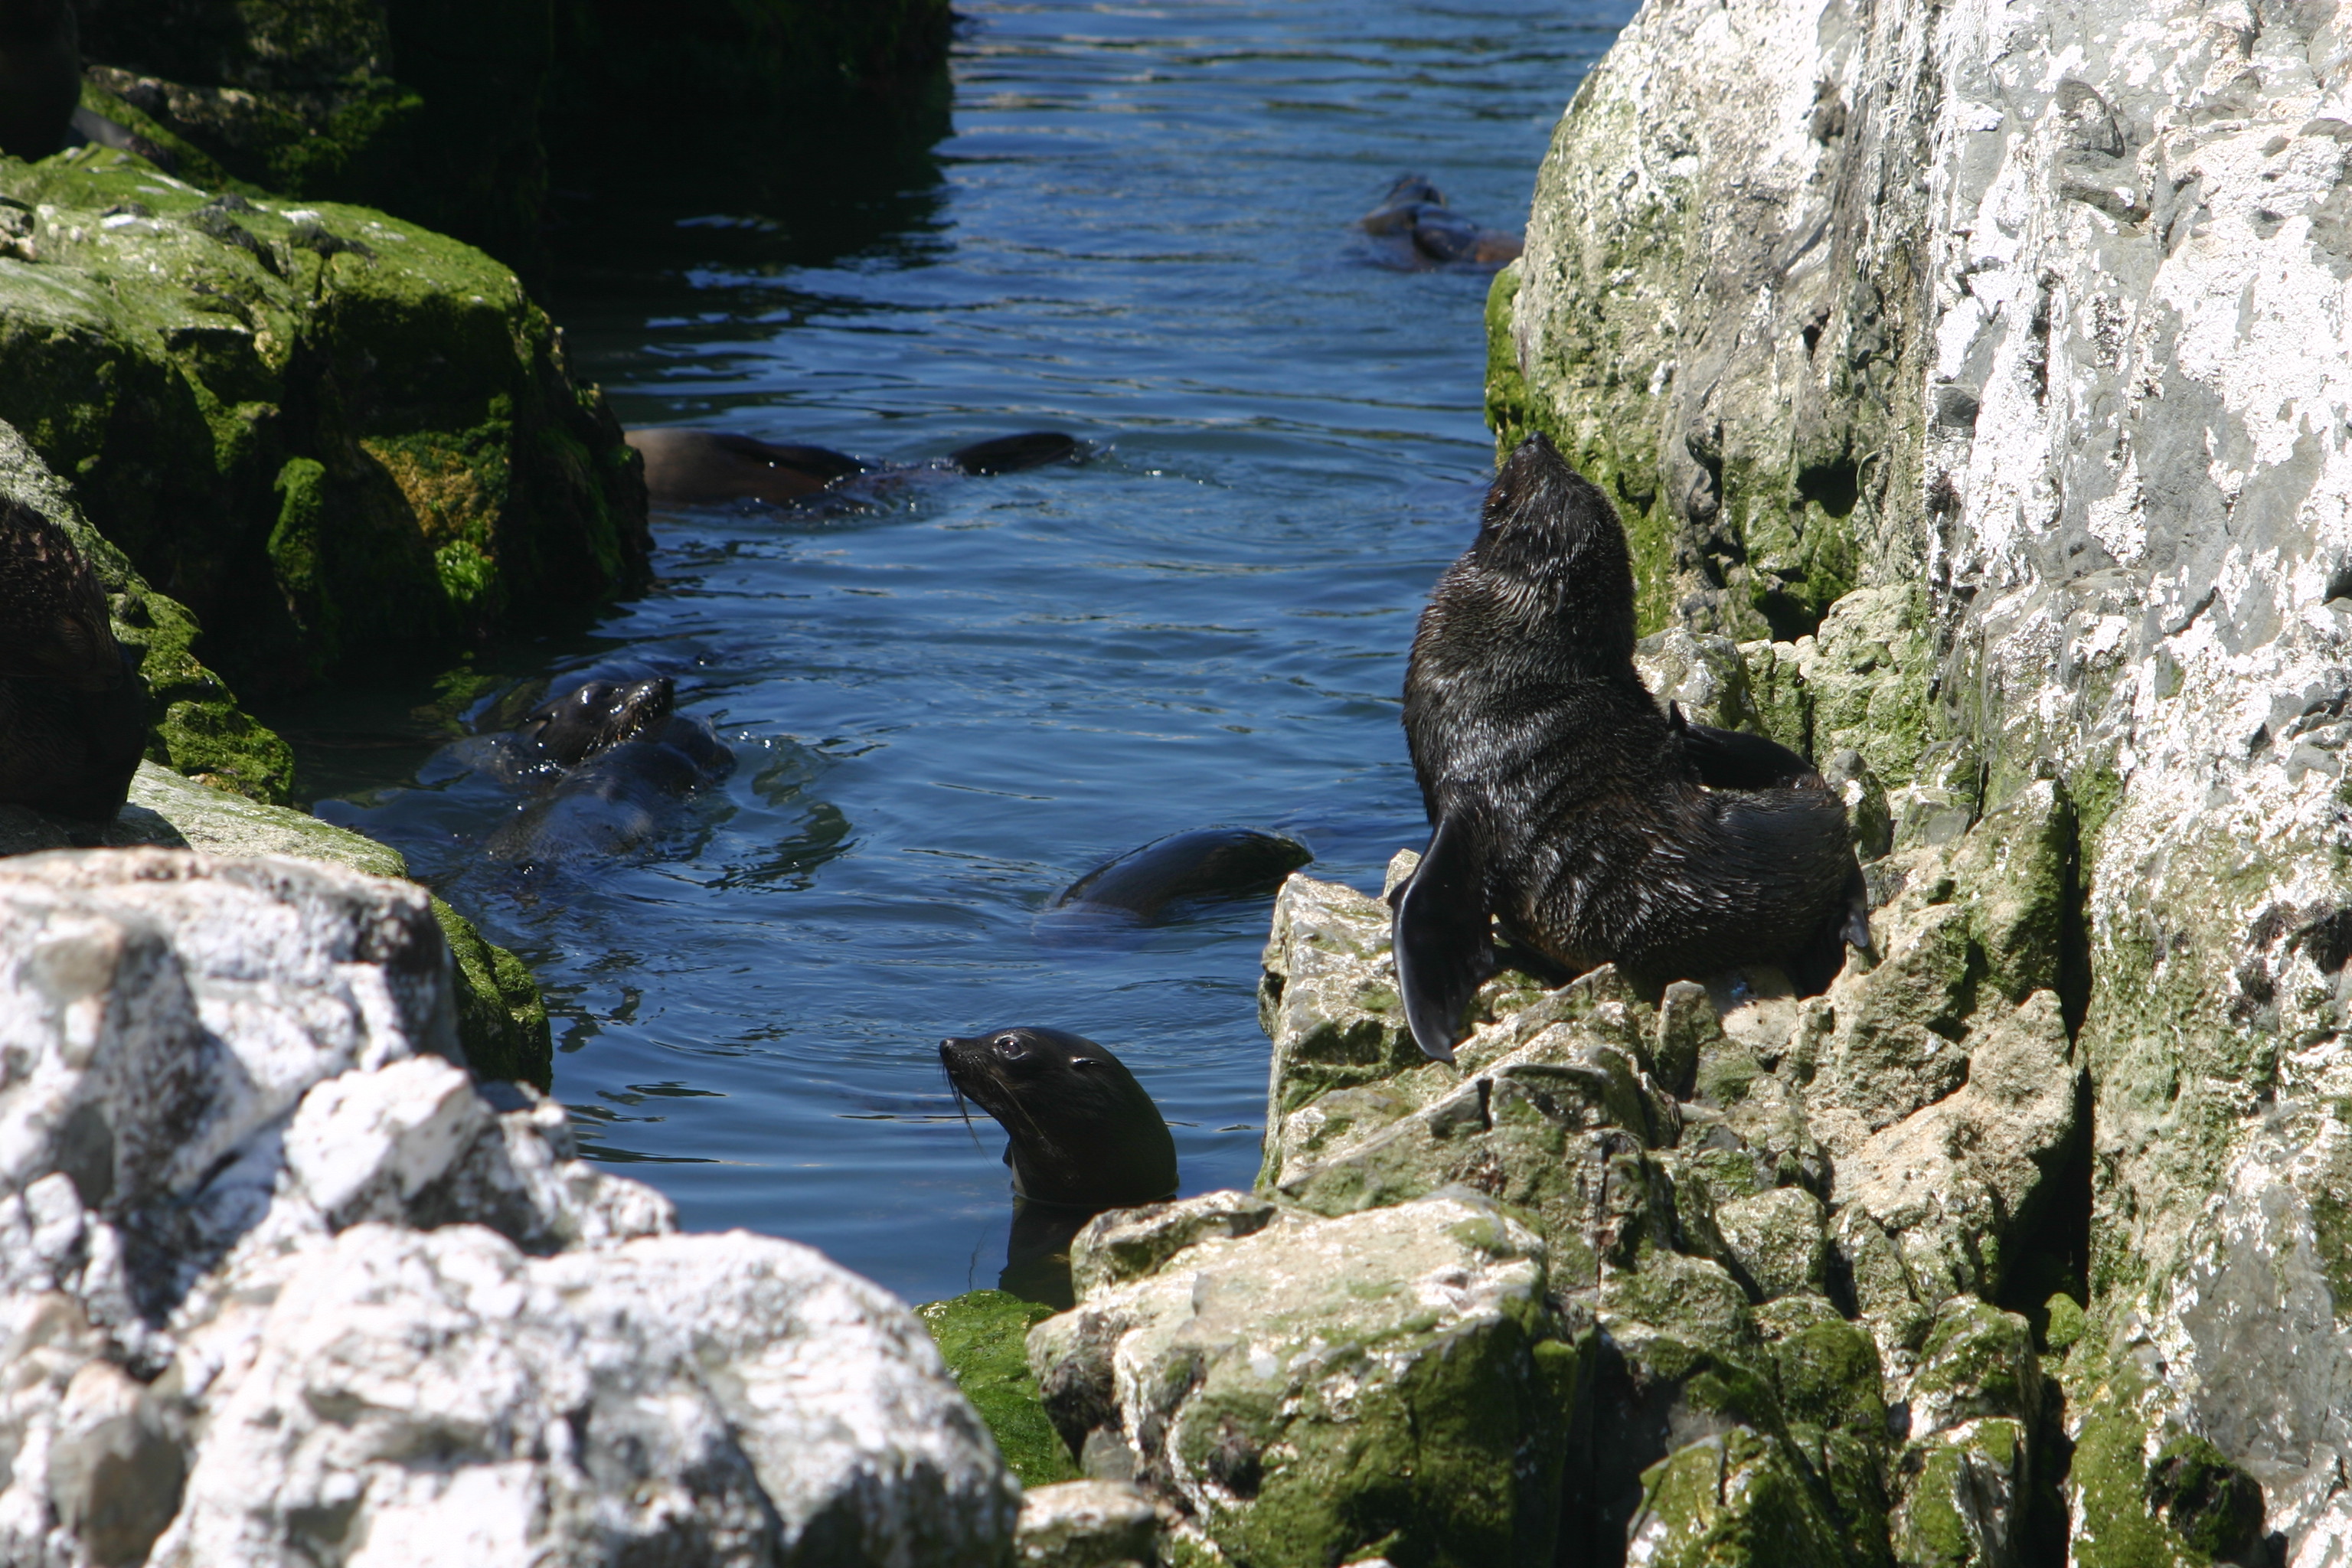 Ōhau New Zealand Fur Seal Sanctuary